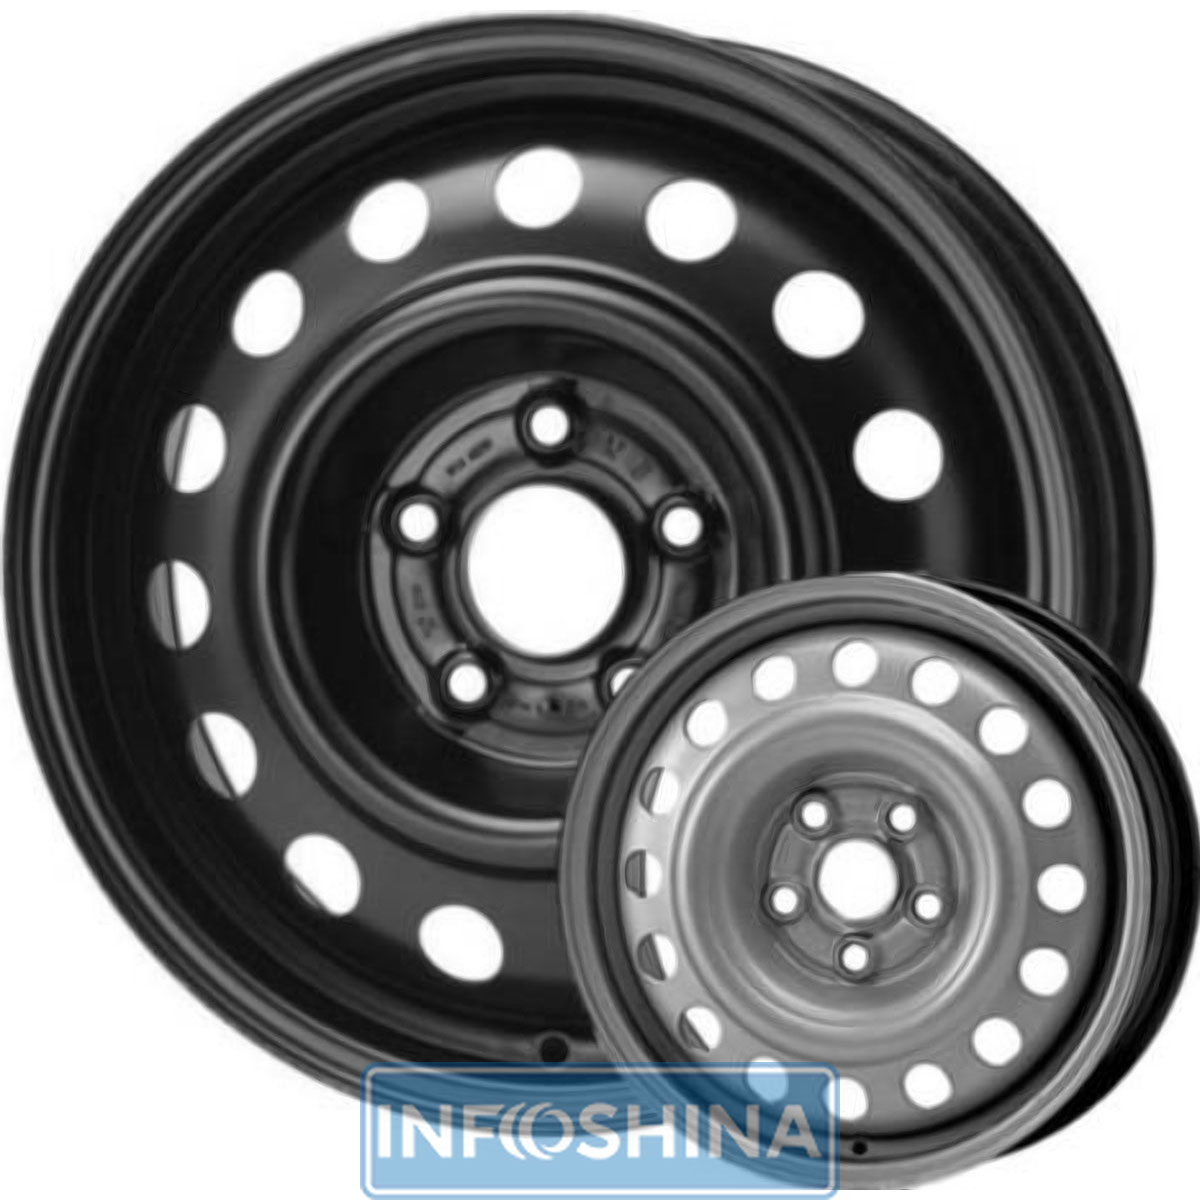 Купить диски Steel Wheels Noname S R13 W5.5 PCD4x1100 ET49 DIA56.6